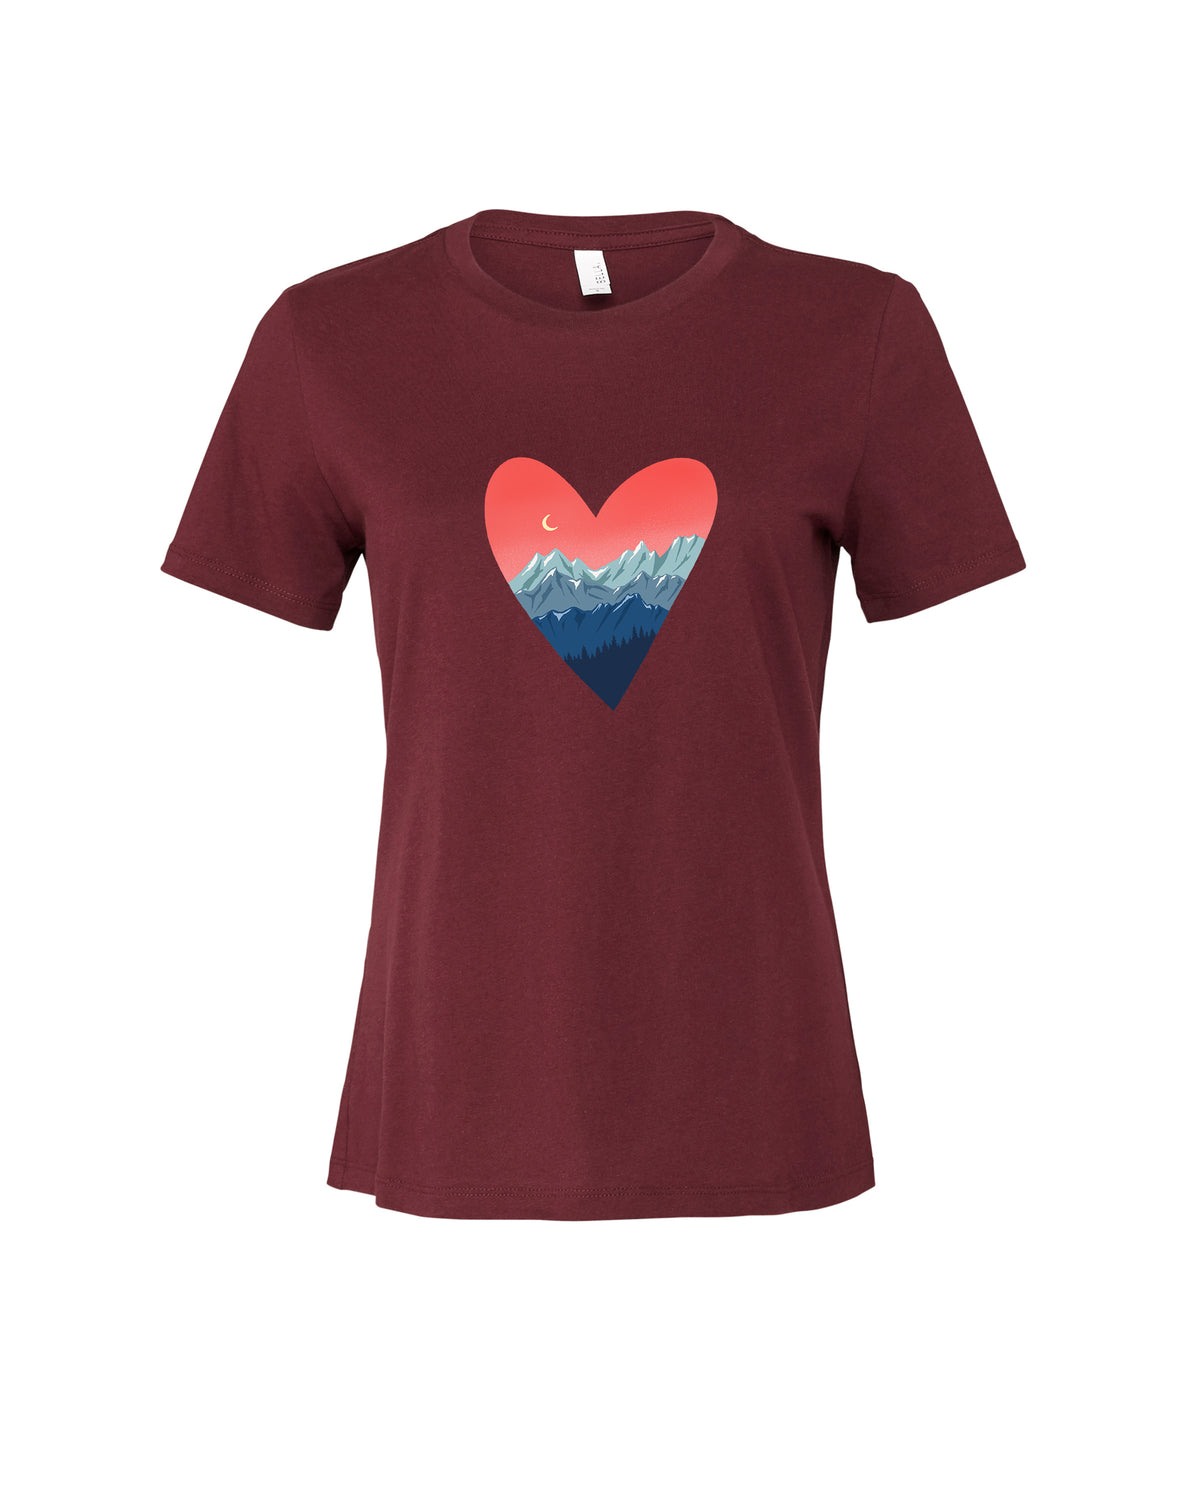 Mountain Love T-Shirt